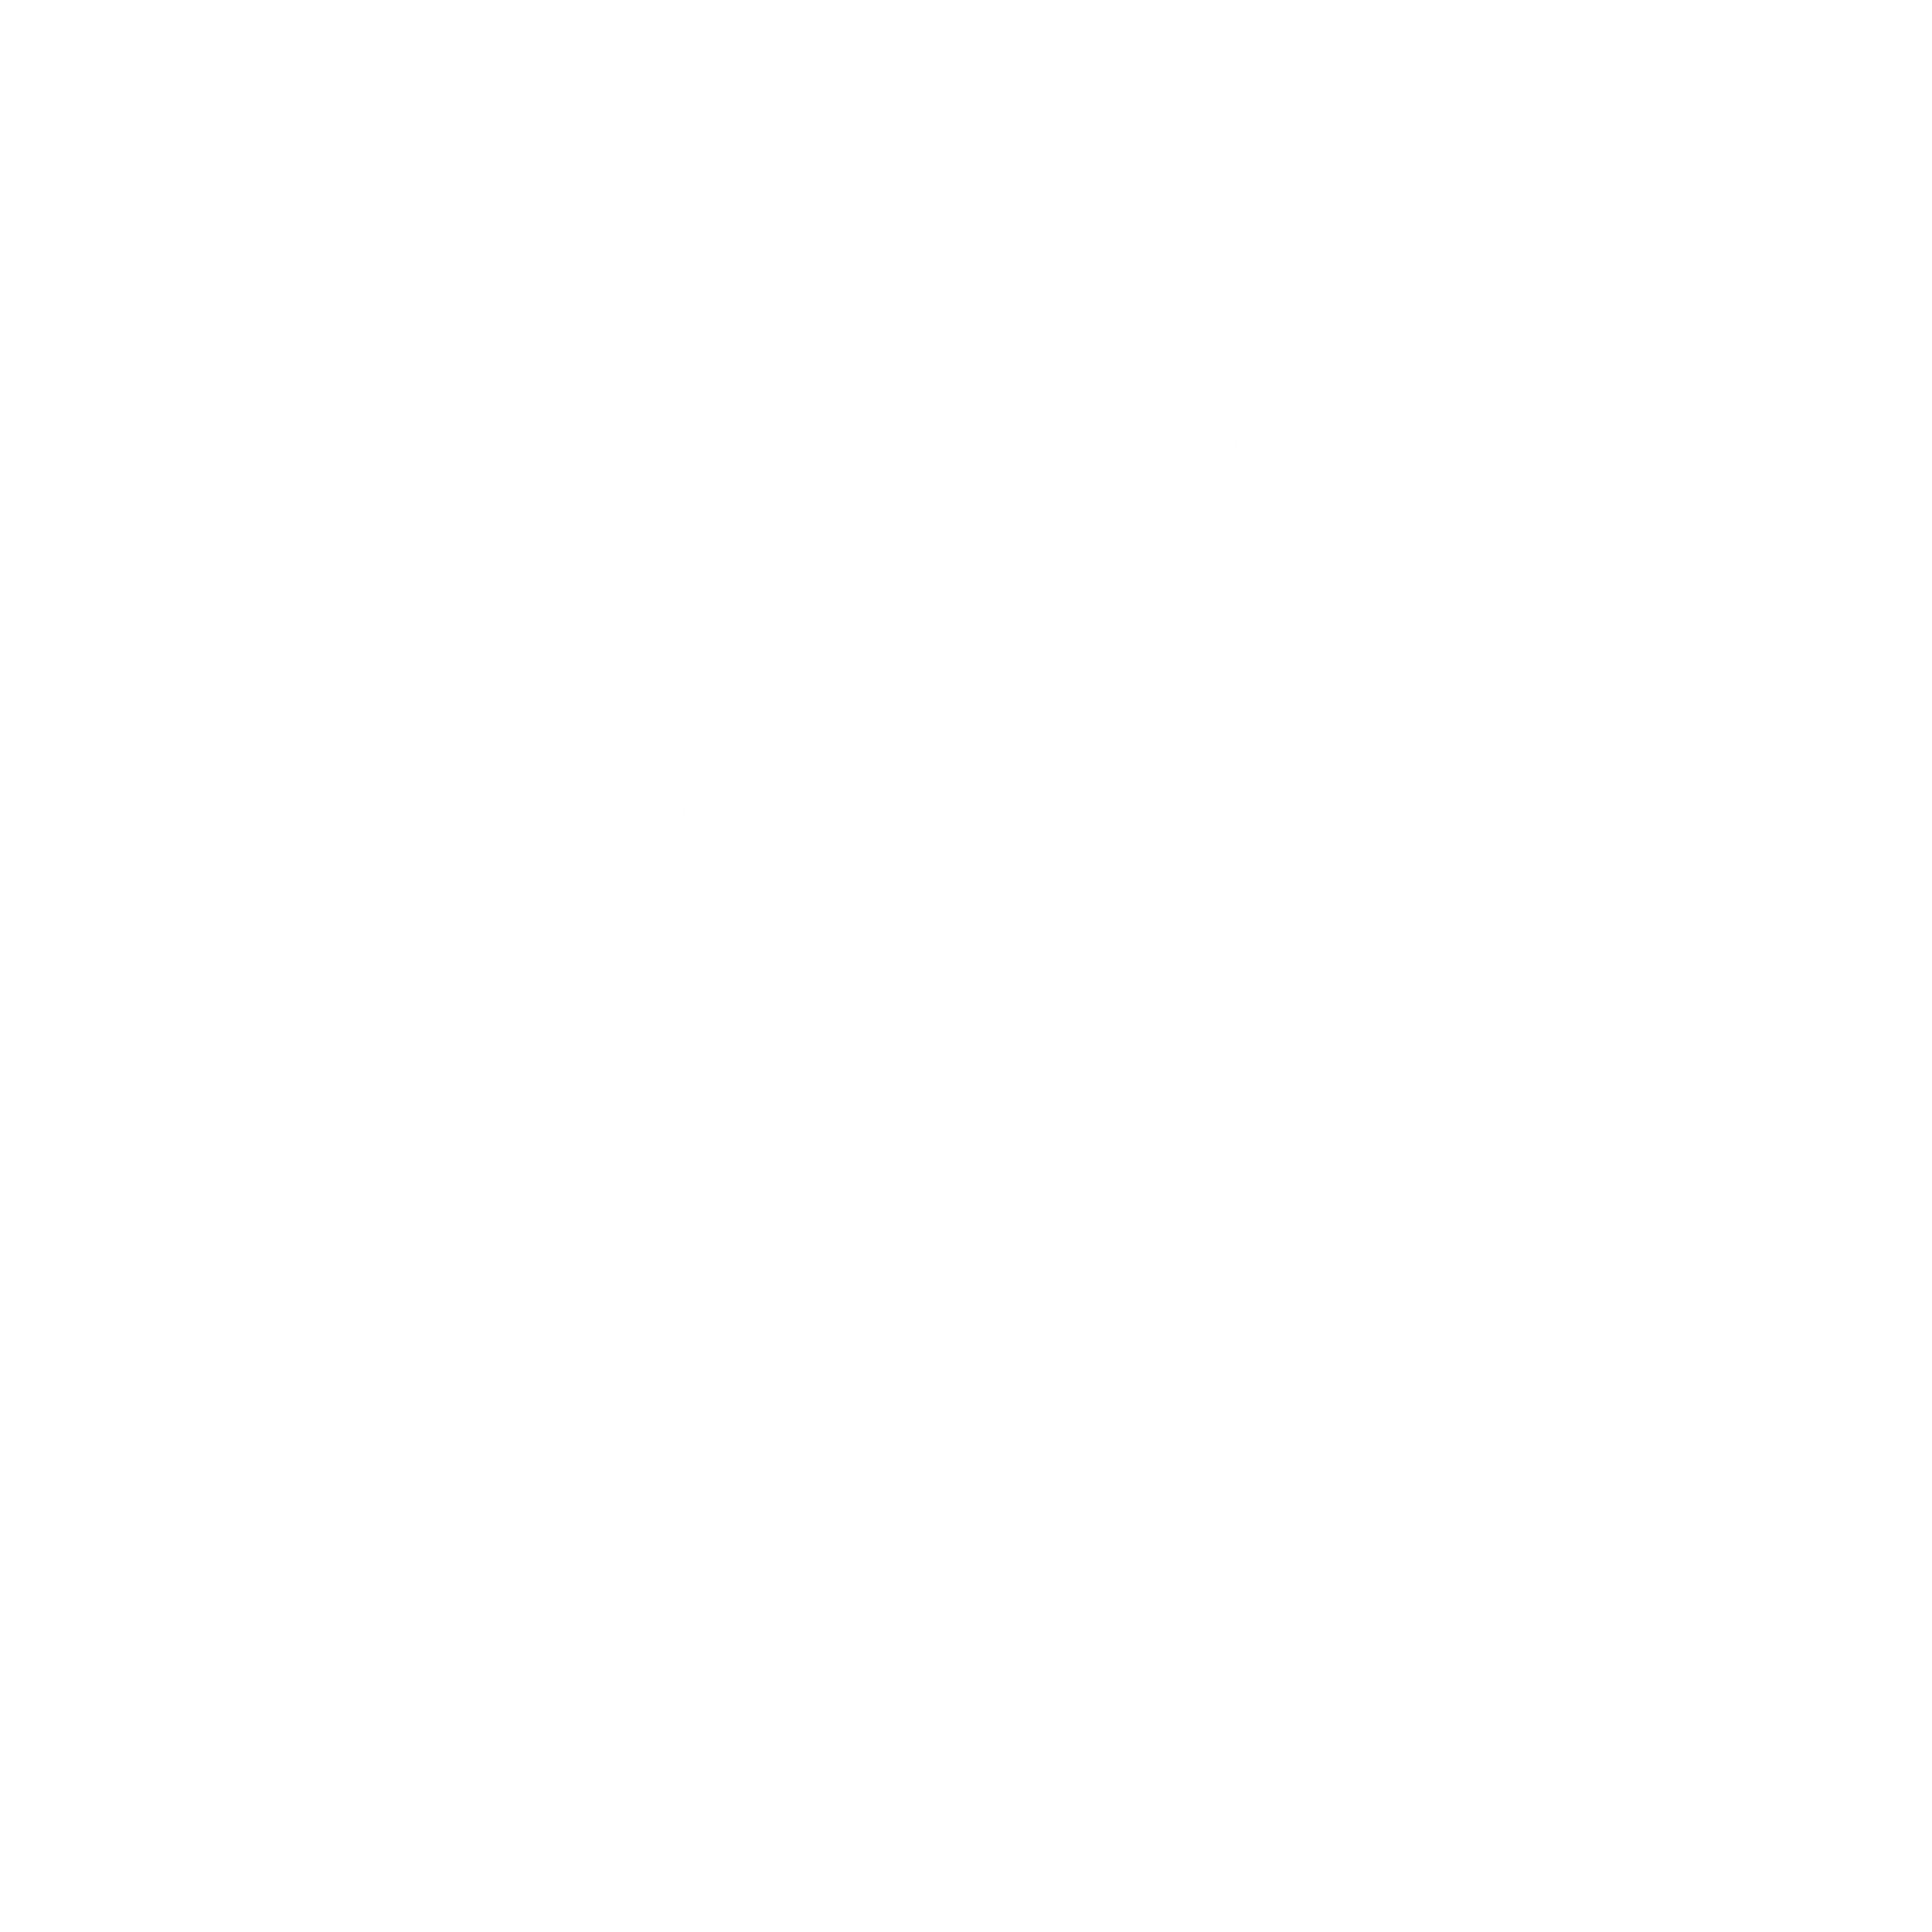 Stone City Farm logo